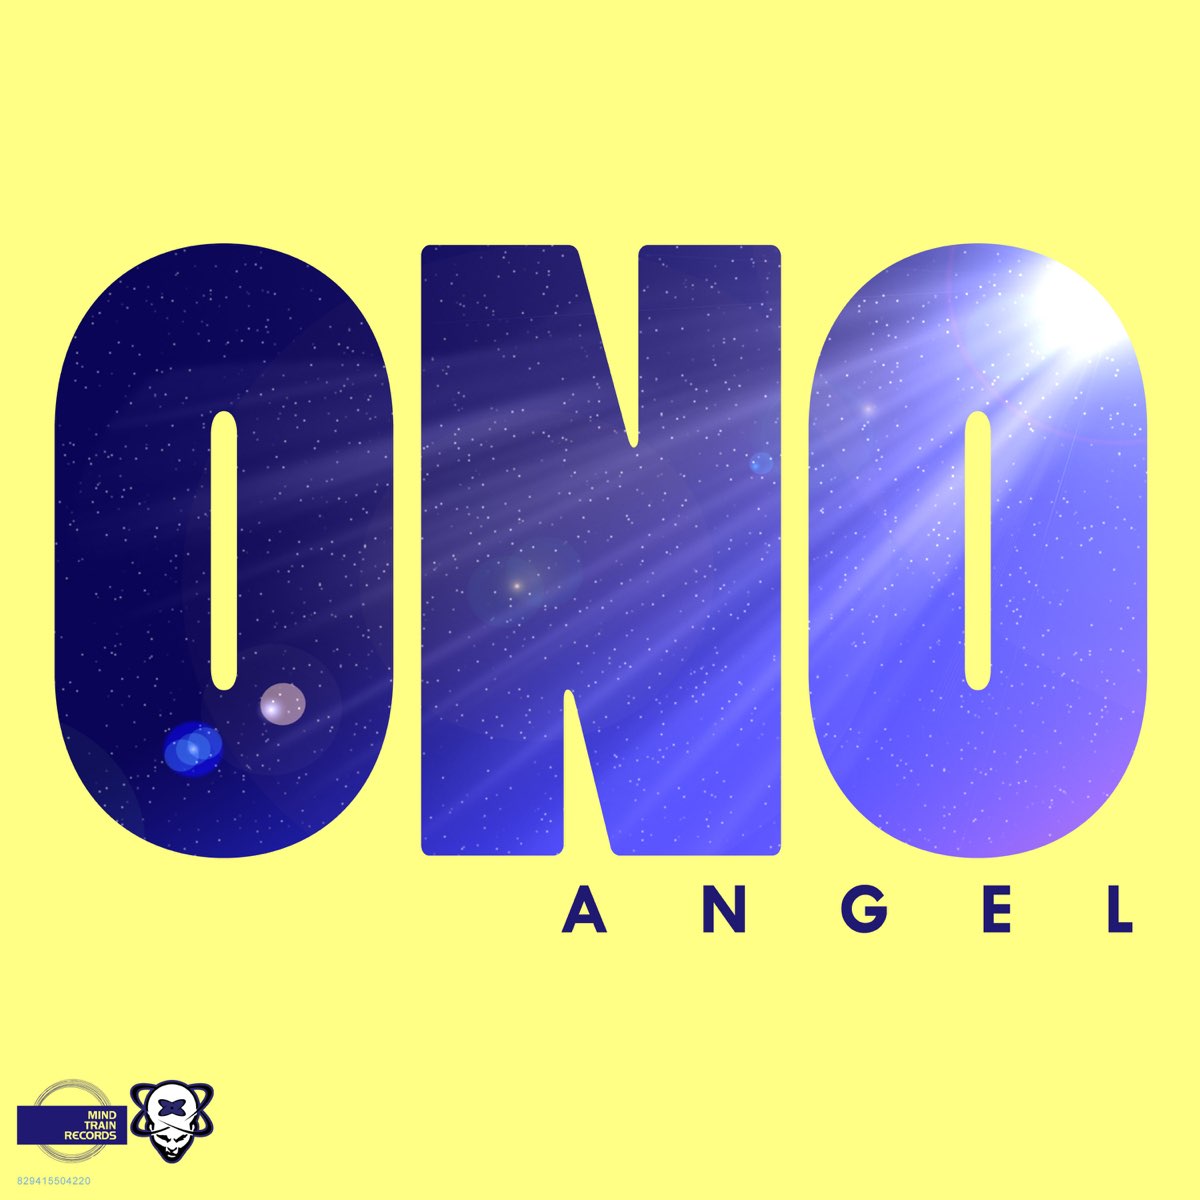 Angel (Remixes Part 3) - Album by Ono - Apple Music